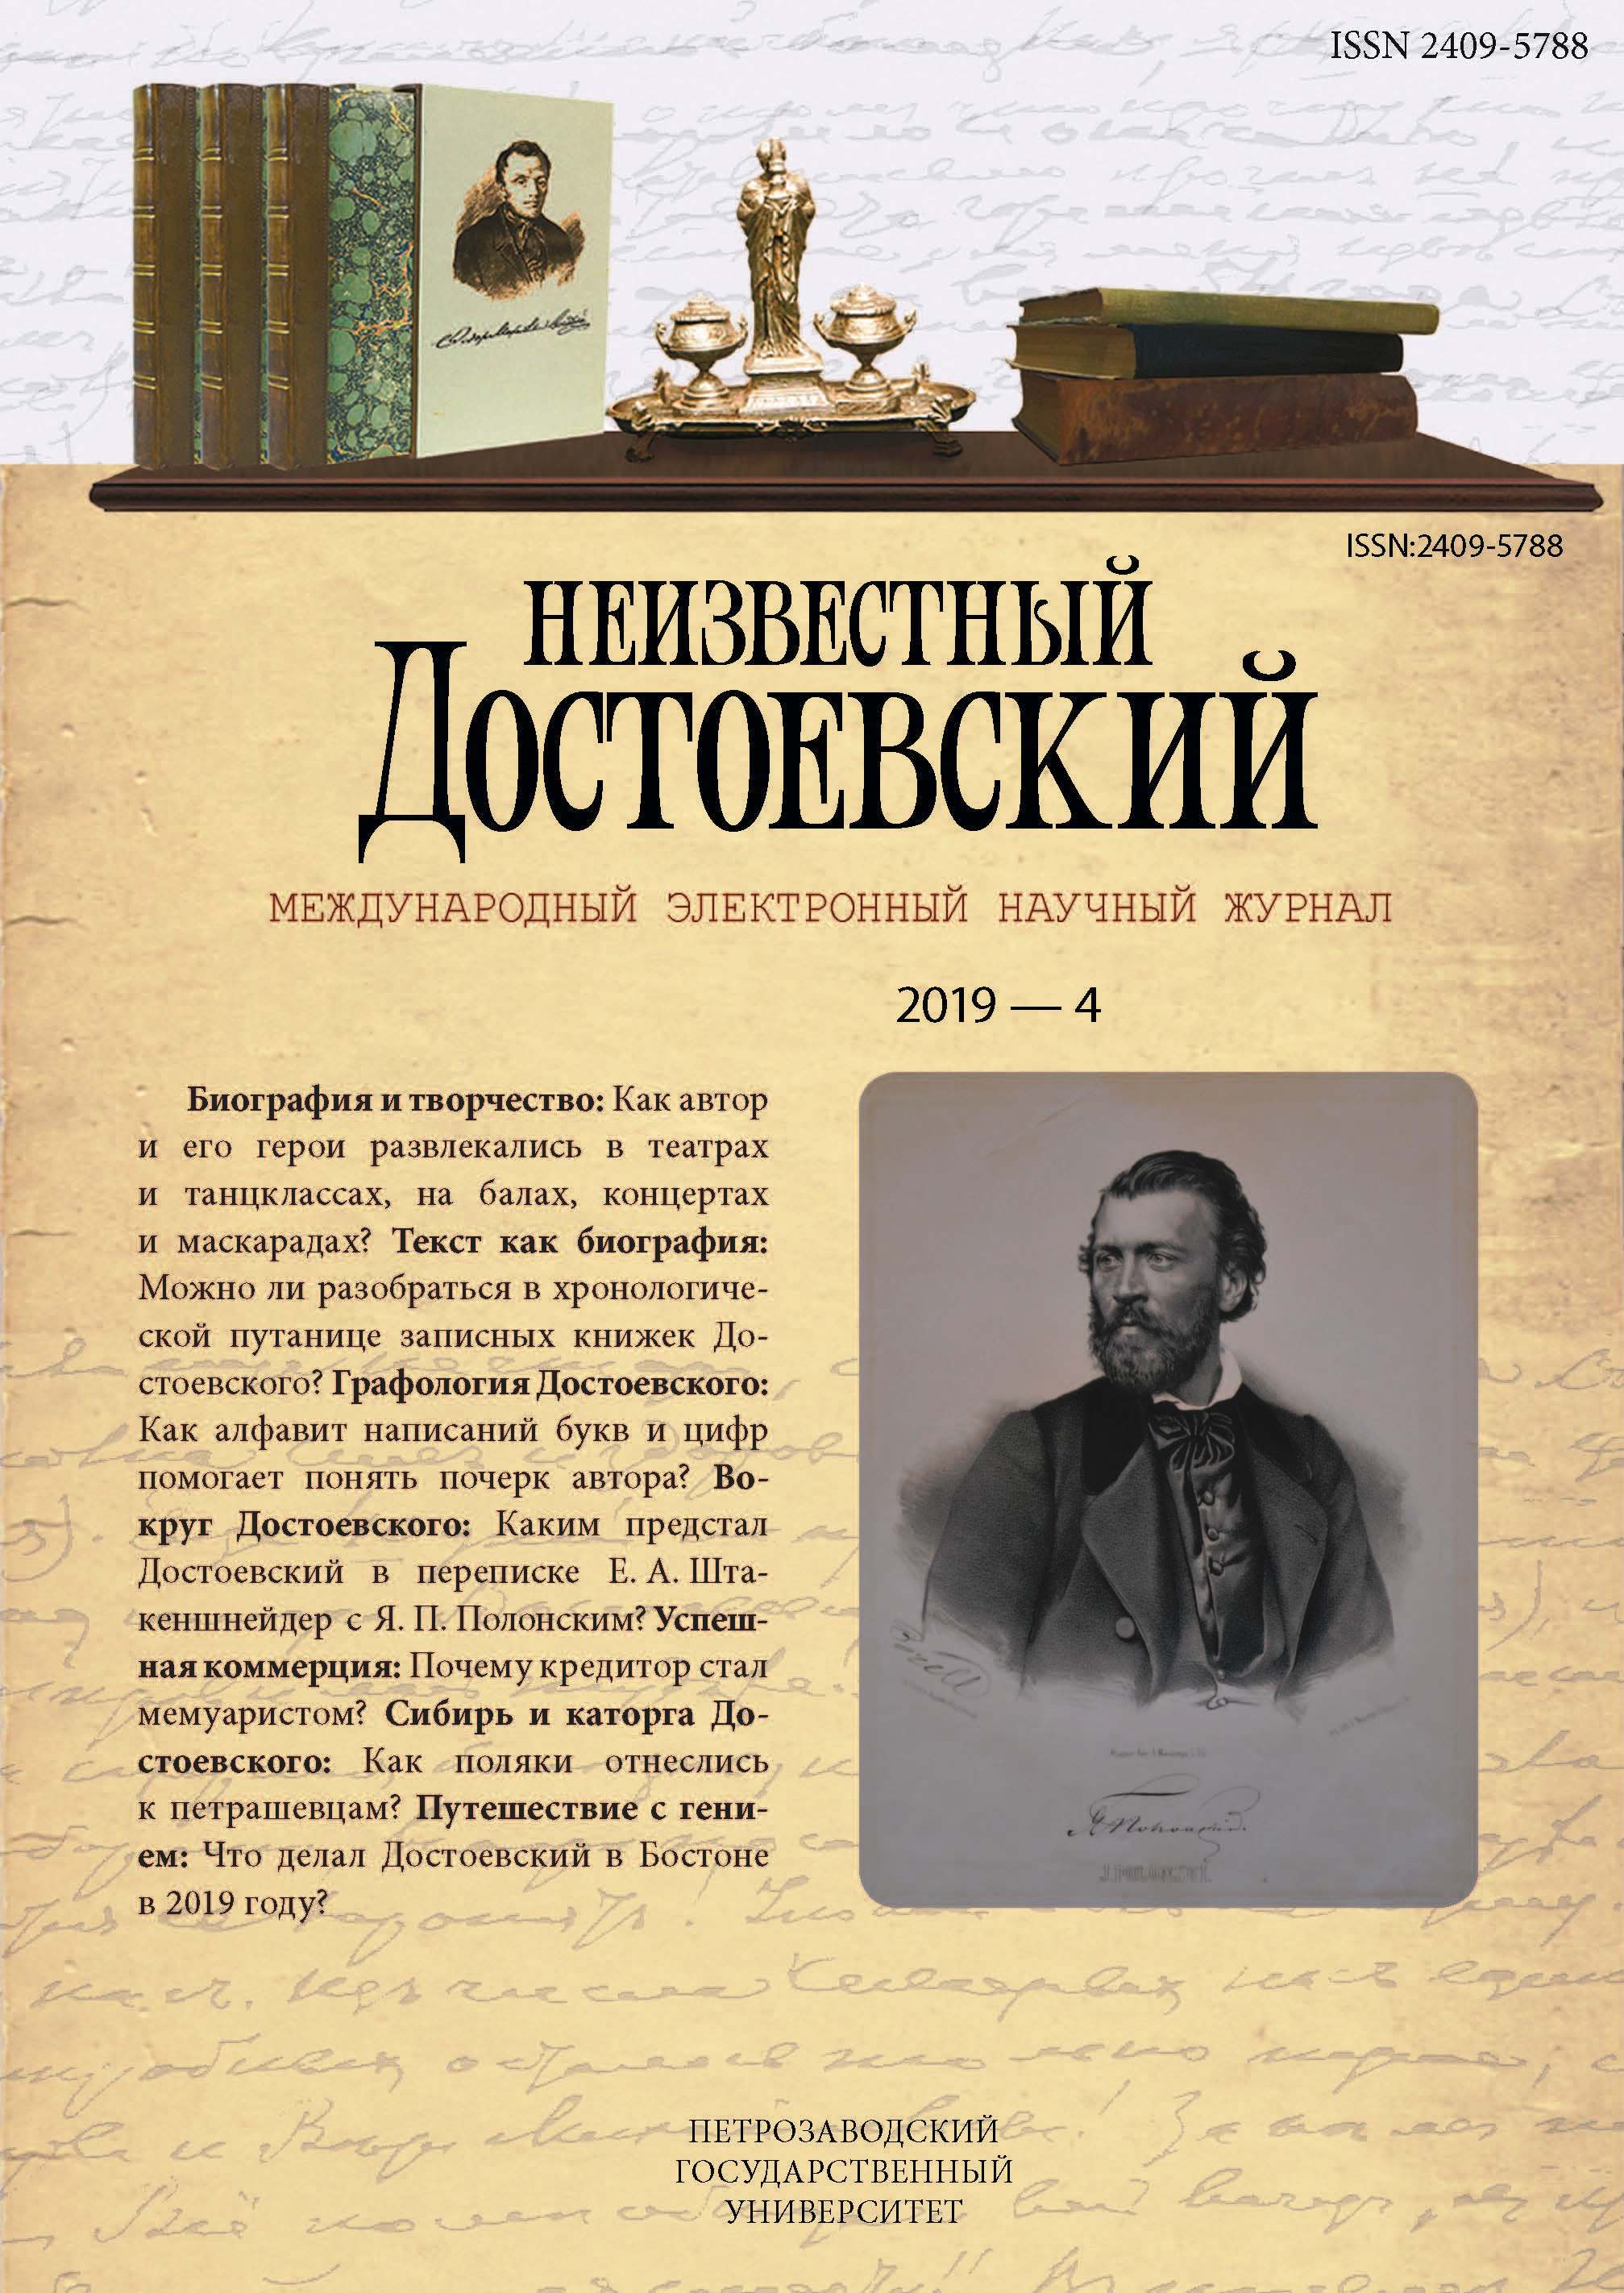 Dostoevsky in Boston: XVII Symposium of the International Dostoevsky Society Cover Image